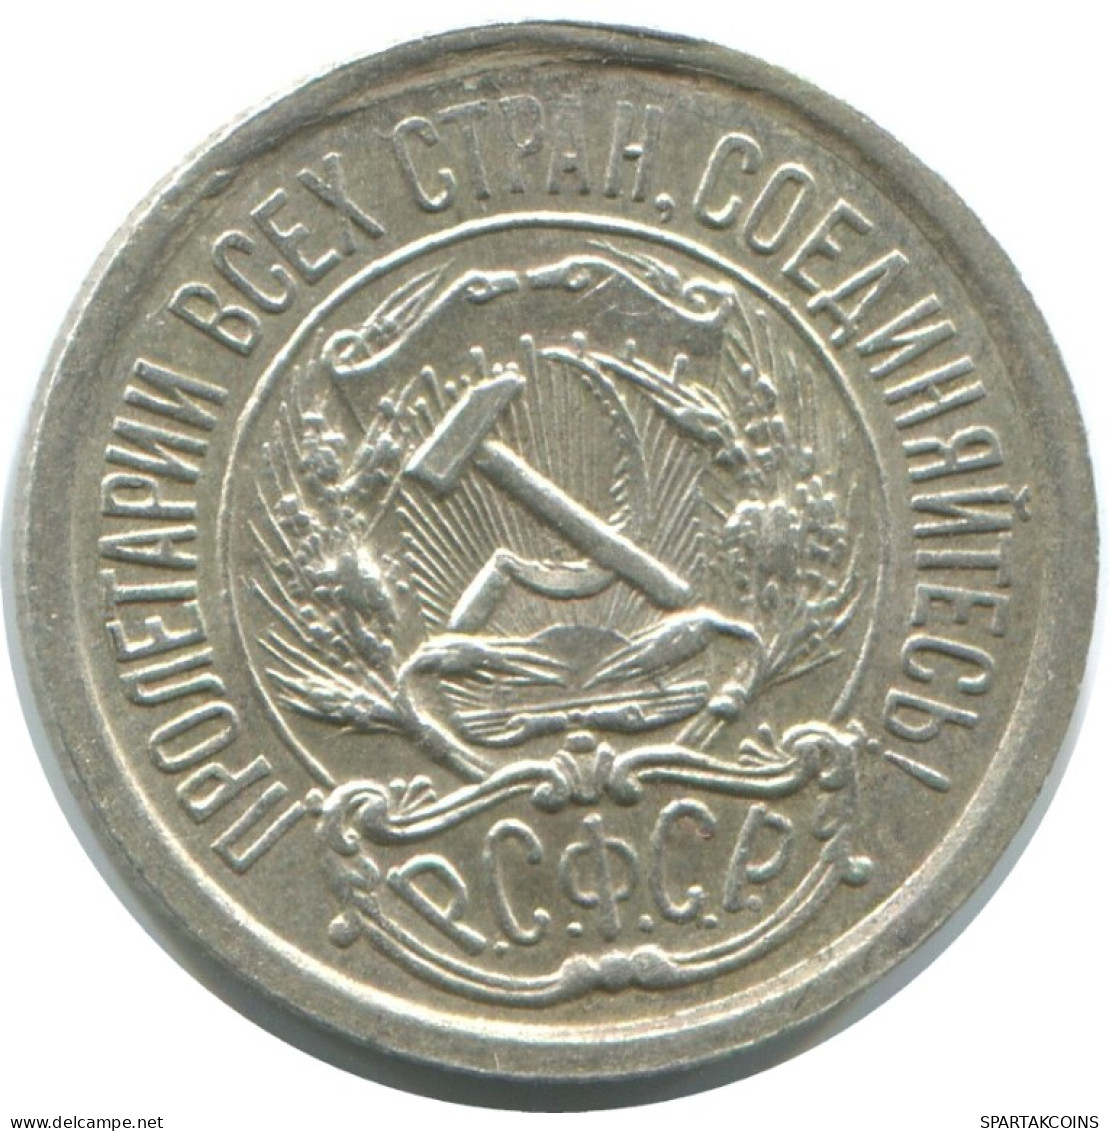 10 KOPEKS 1923 RUSSIA RSFSR SILVER Coin HIGH GRADE #AE922.4.U.A - Russia